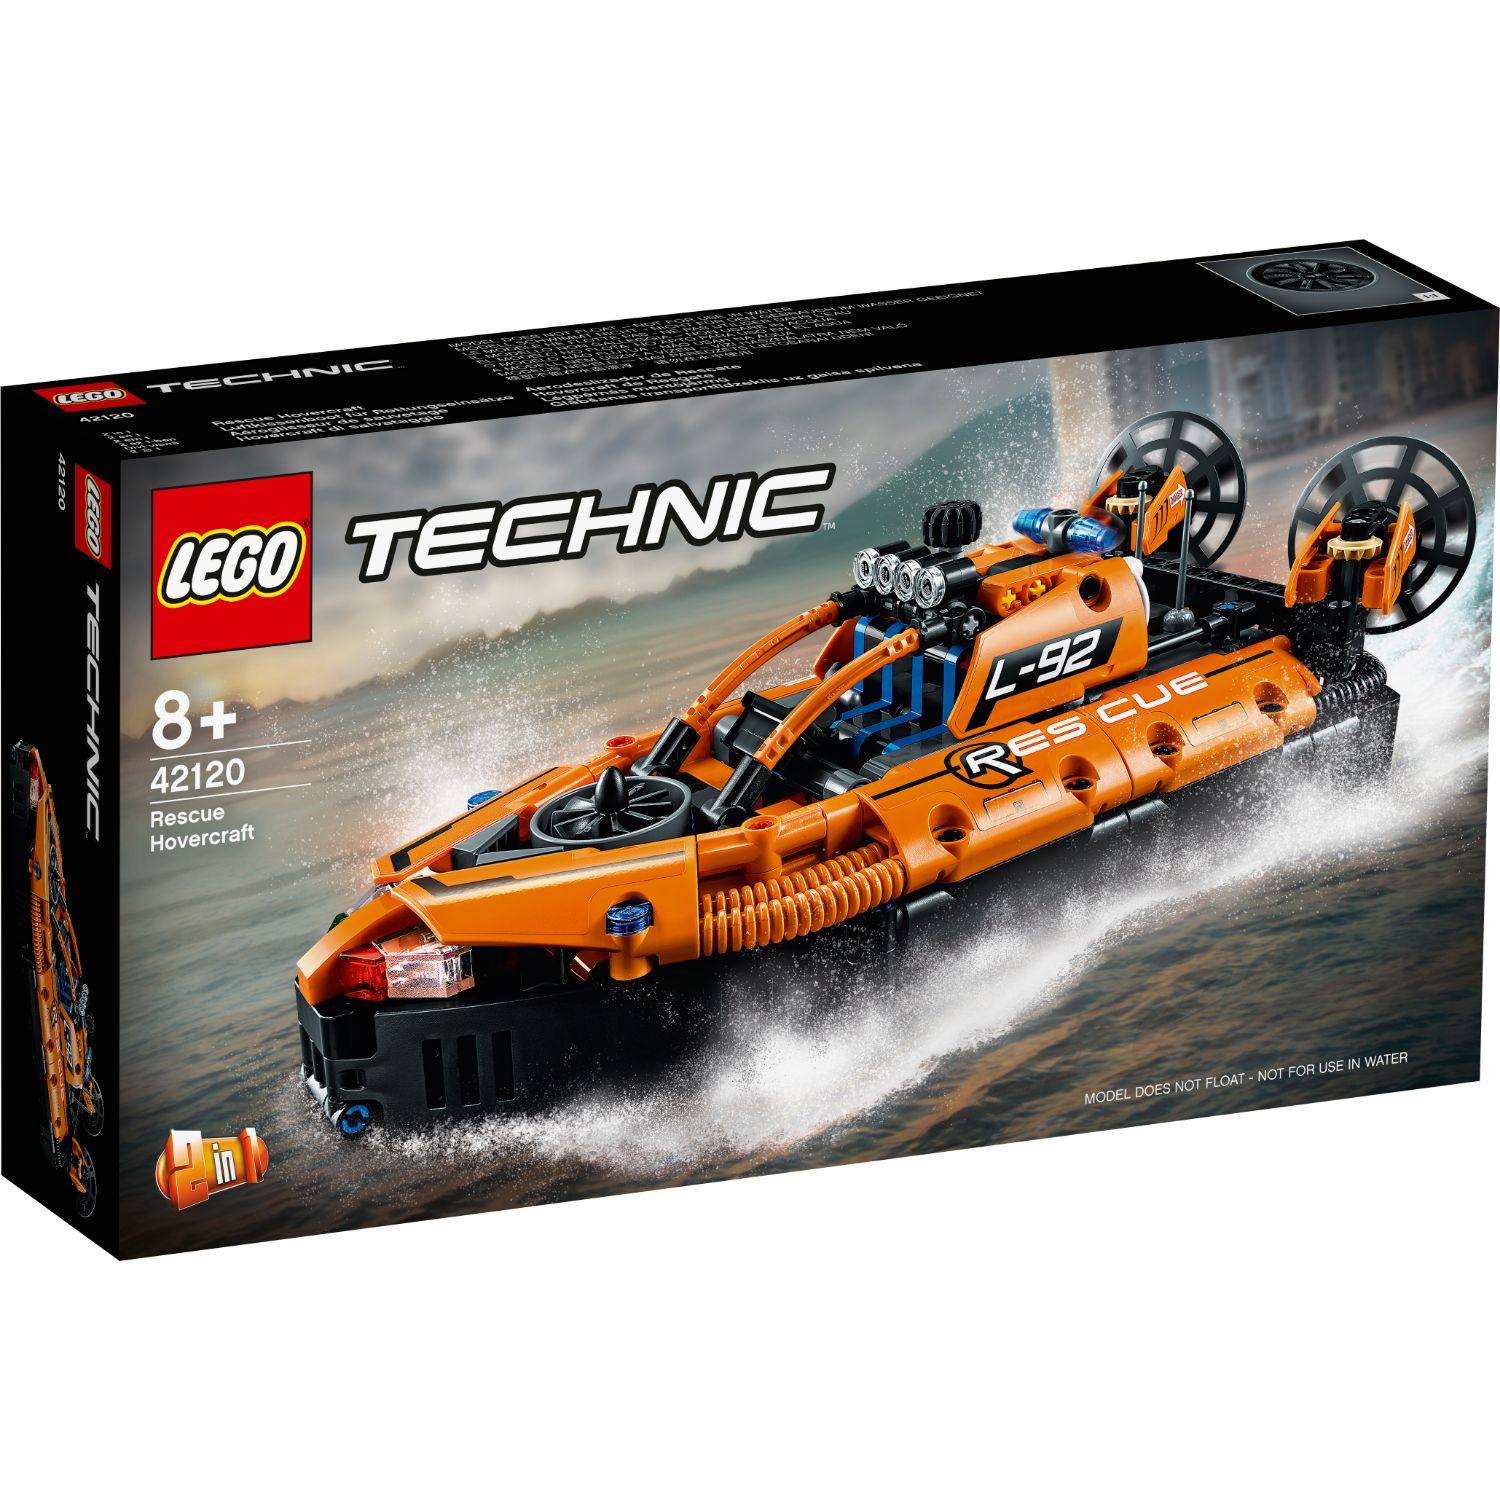 LEGO TECHNIC 42120 REDDINGHOVERCRAFT